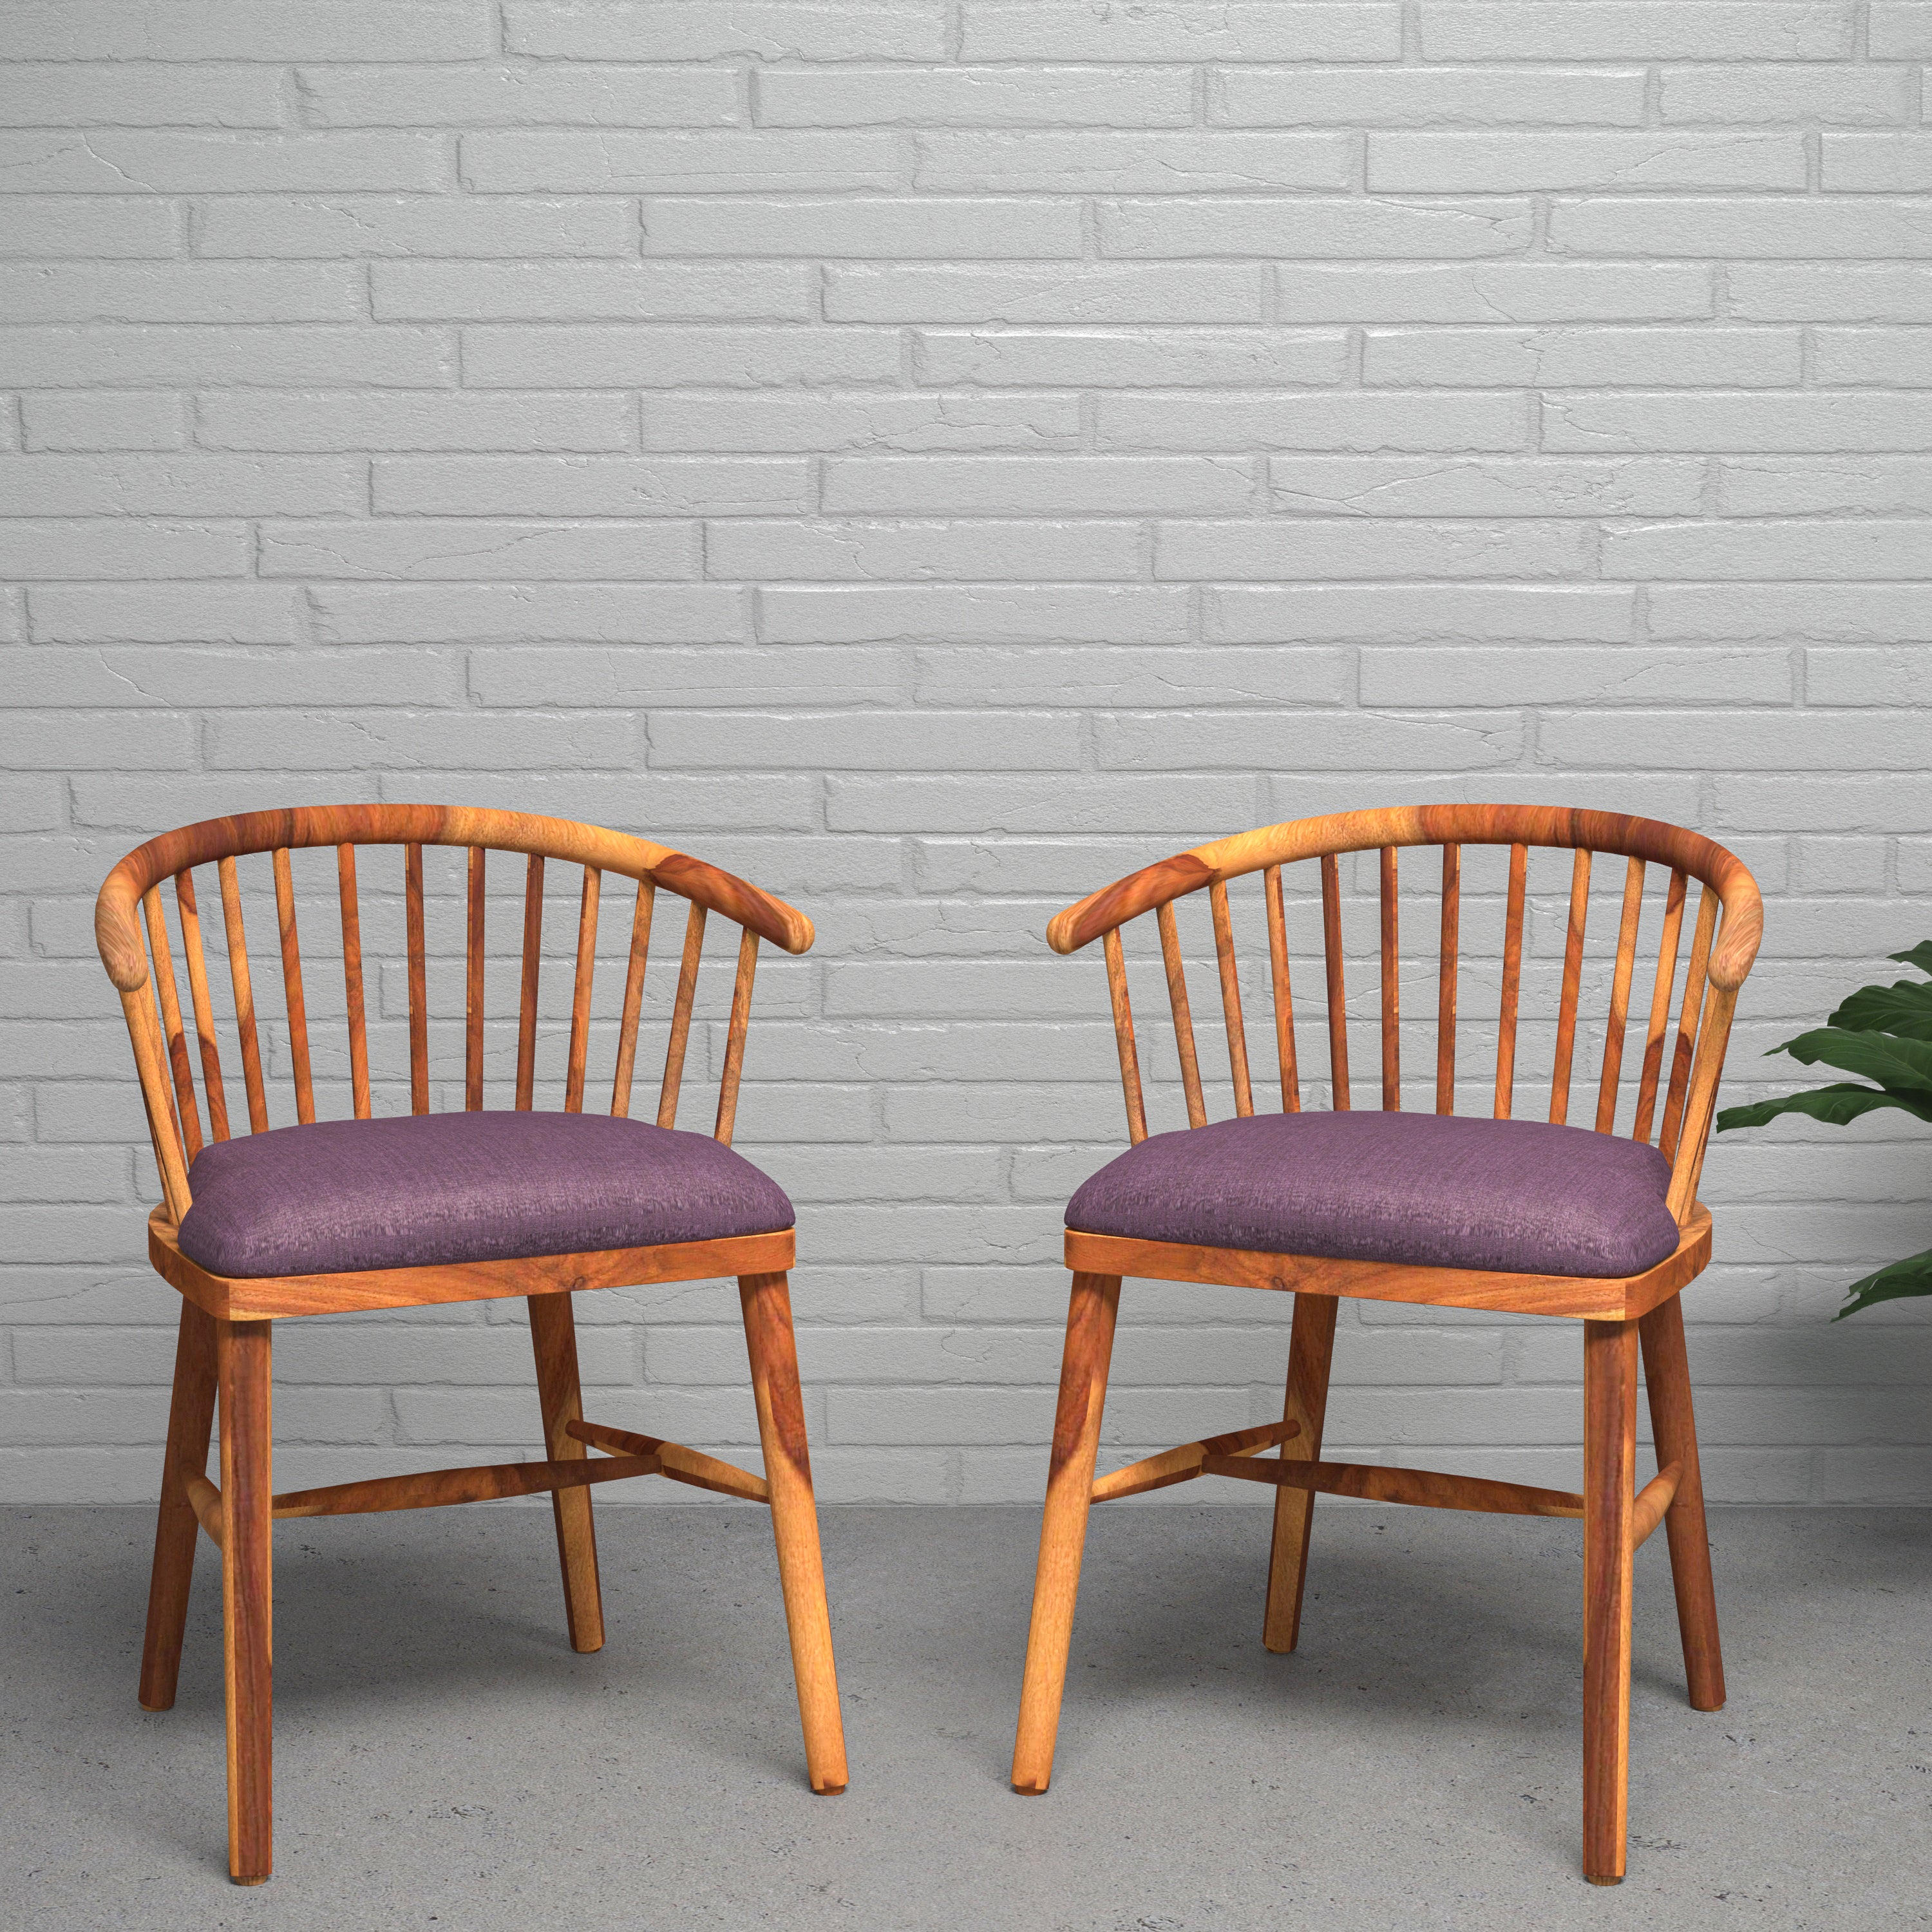 Buy Arm Chair Online | Wooden Arm Chair - Woodsala